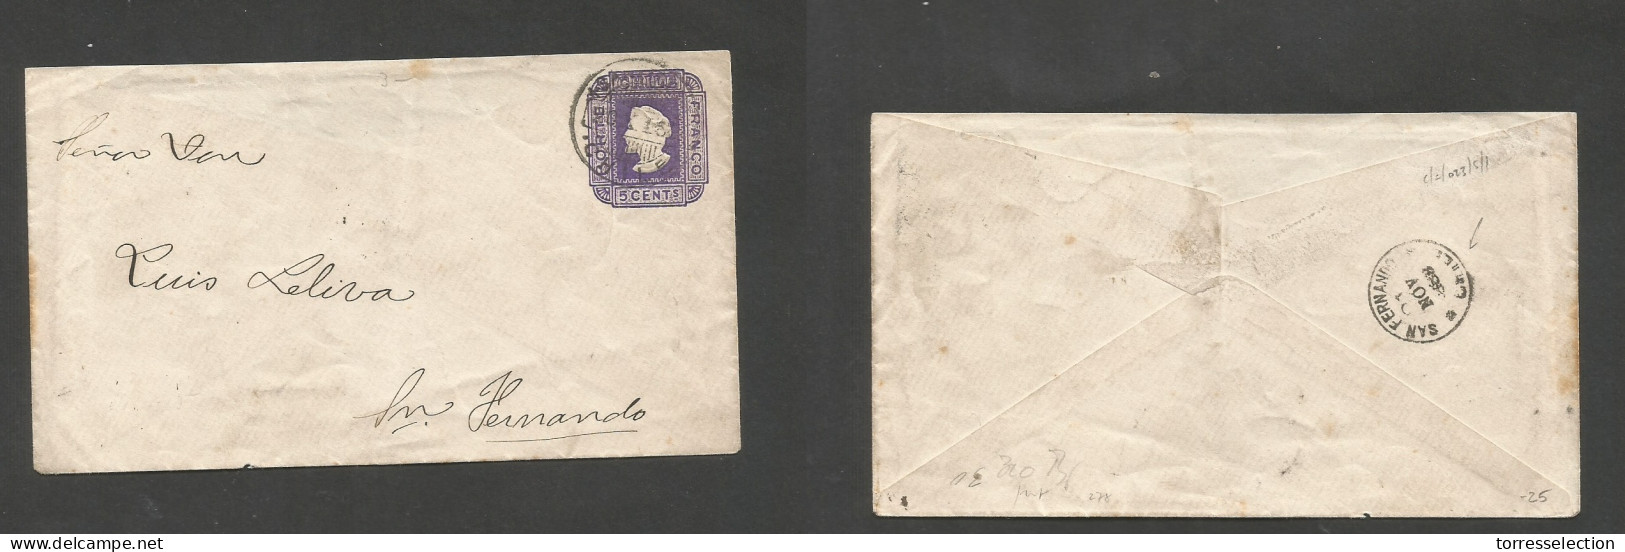 CHILE - Stationery. 1889 (20 Nov) Stgo - San Fernando (24 Nov) 5c Purple Stat Envelope, Paper With Watermark Lines At 20 - Chili